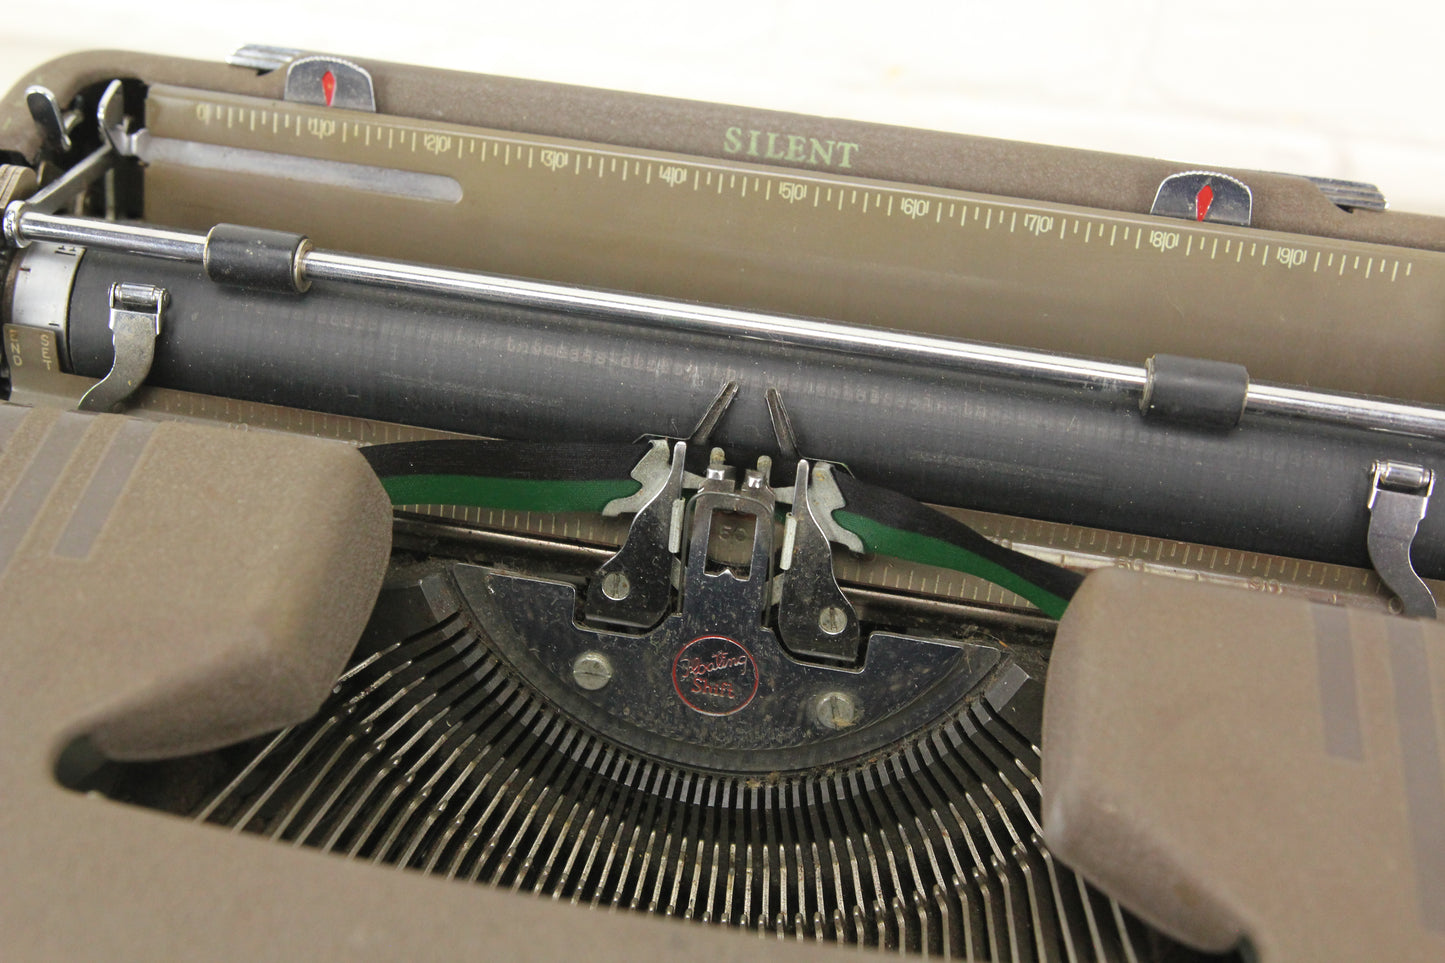 Smith-Corona Silent 5S Series Portable Typewriter with Case, 1952